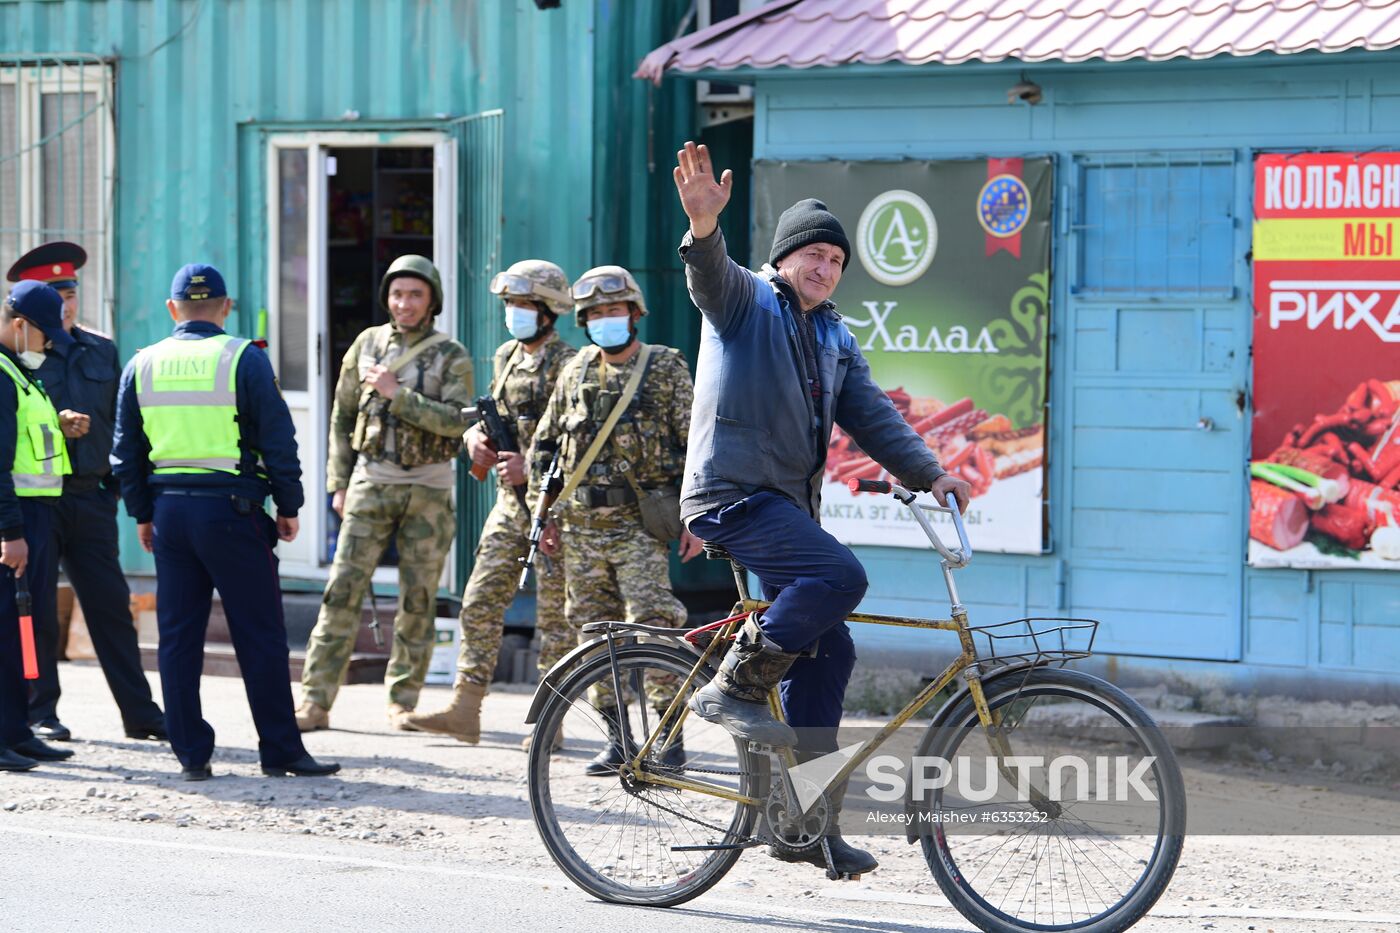 Kyrgyzstan State Of Emergency